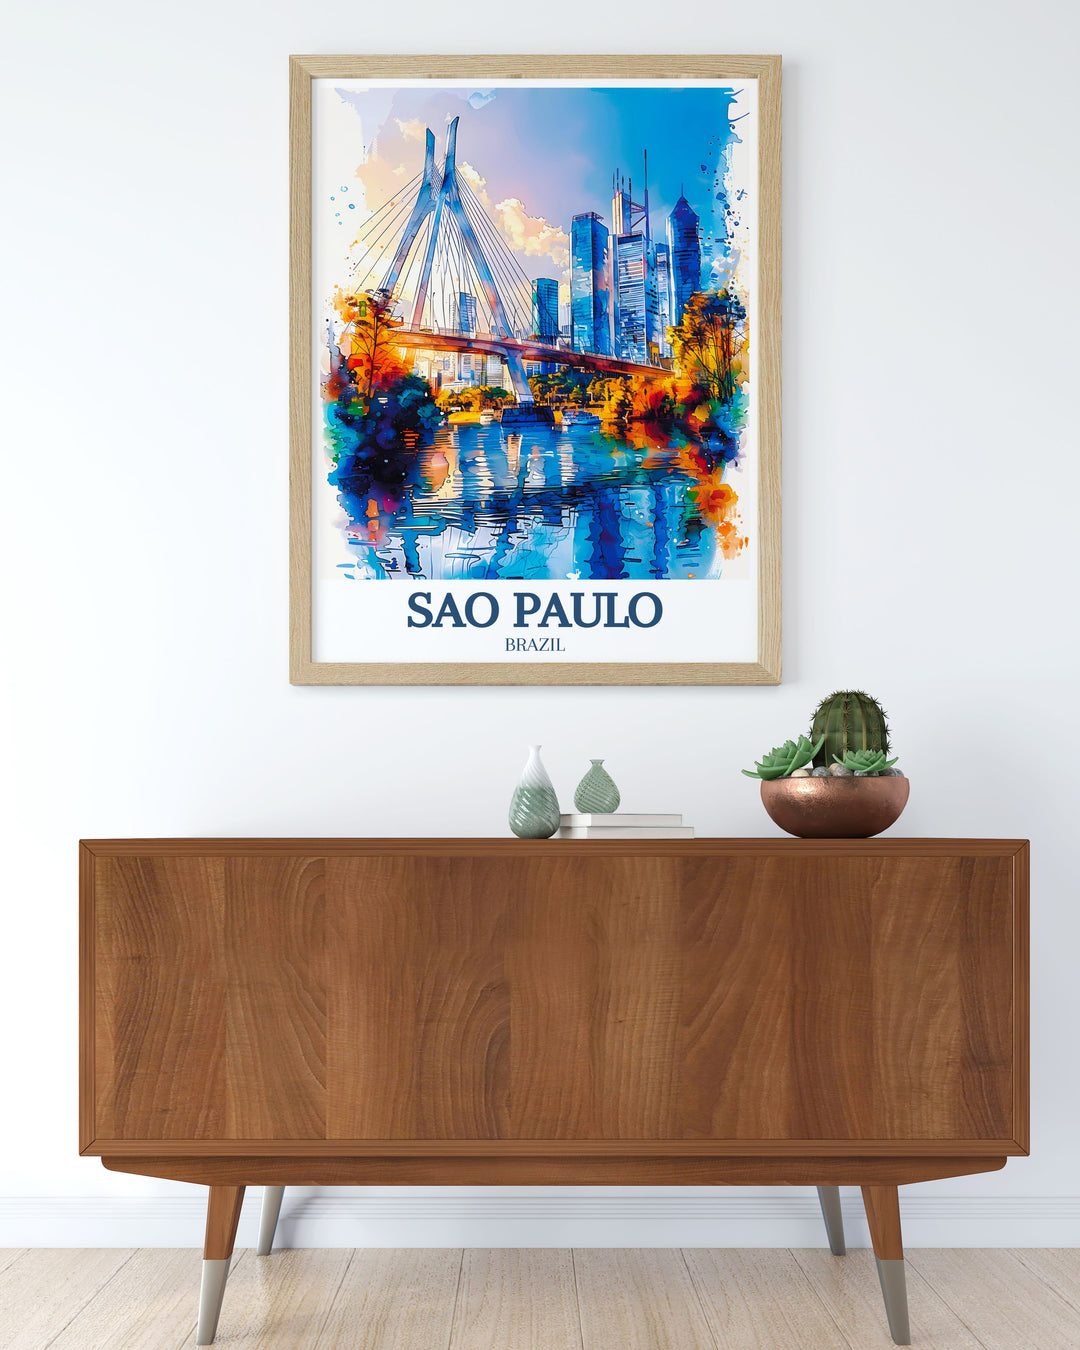 Sao Paulo art print showcasing the Octávio Frias de Oliveira Bridge, an iconic symbol of modern engineering and architectural brilliance in Brazil.